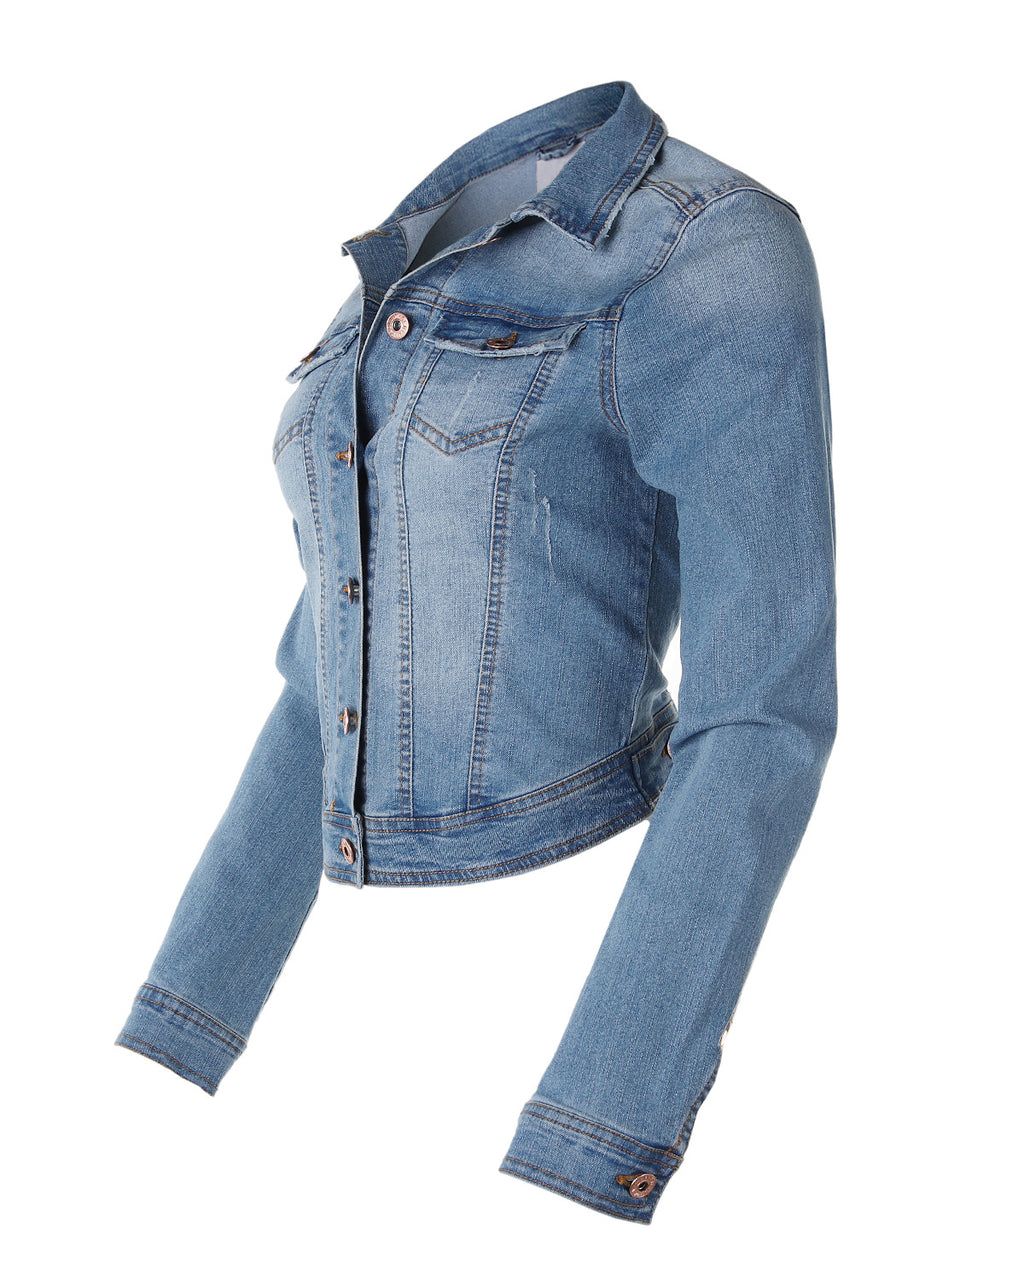 ZIMEGO Women’s Long Sleeve Crop Top Button Up Comfort Stretch Denim Jacket